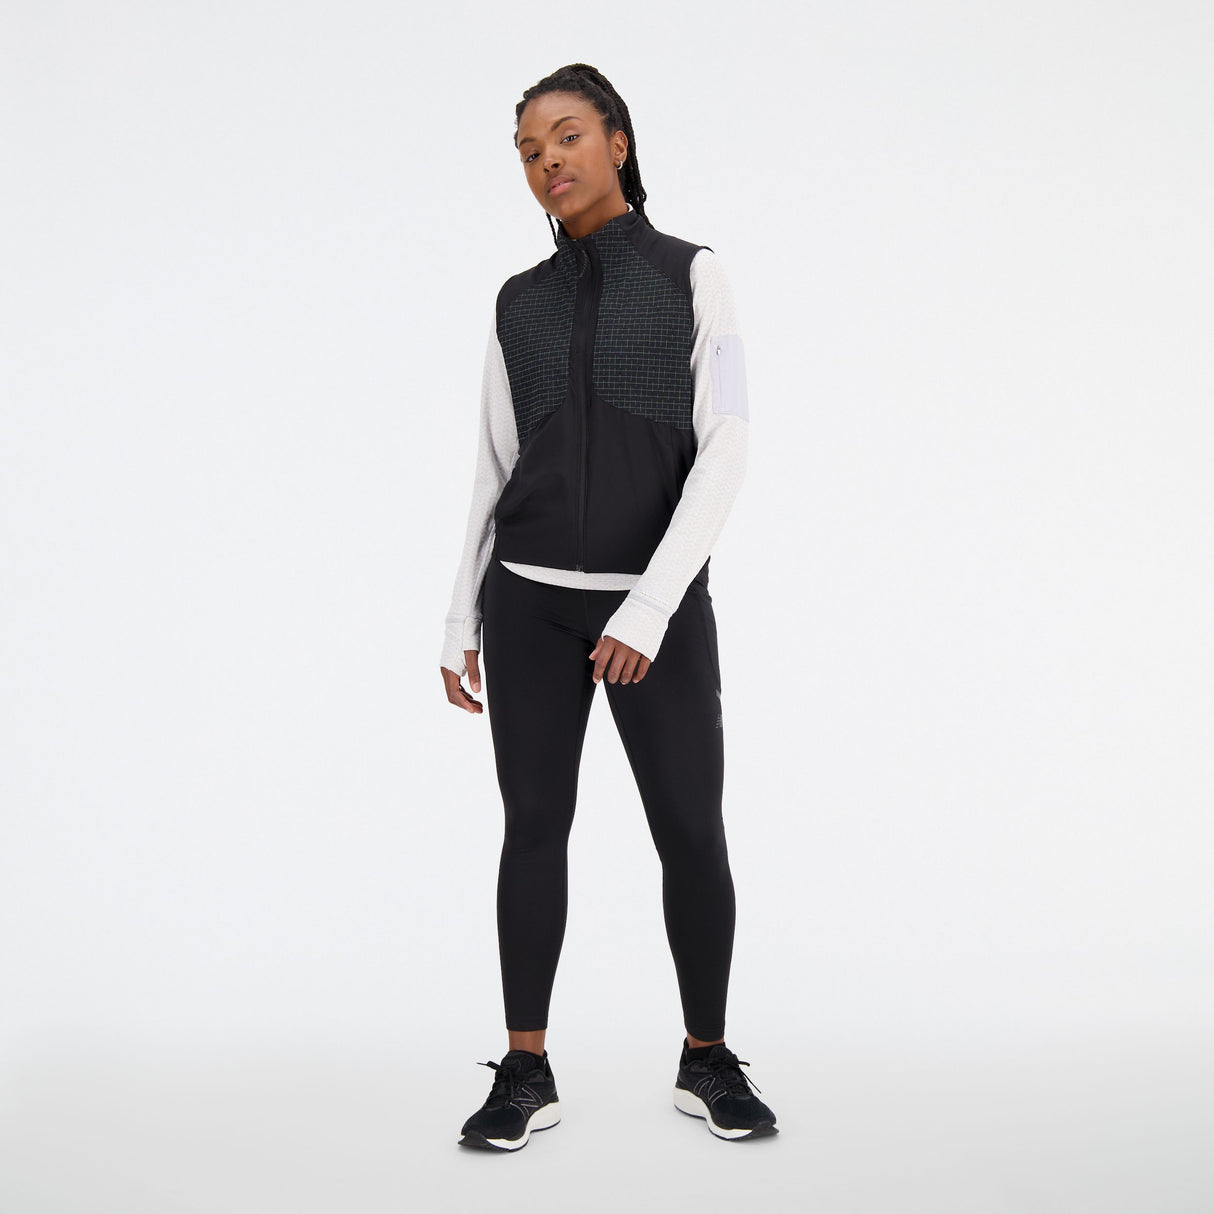 New Balance Women's Impact Run Luminous Packable Vest